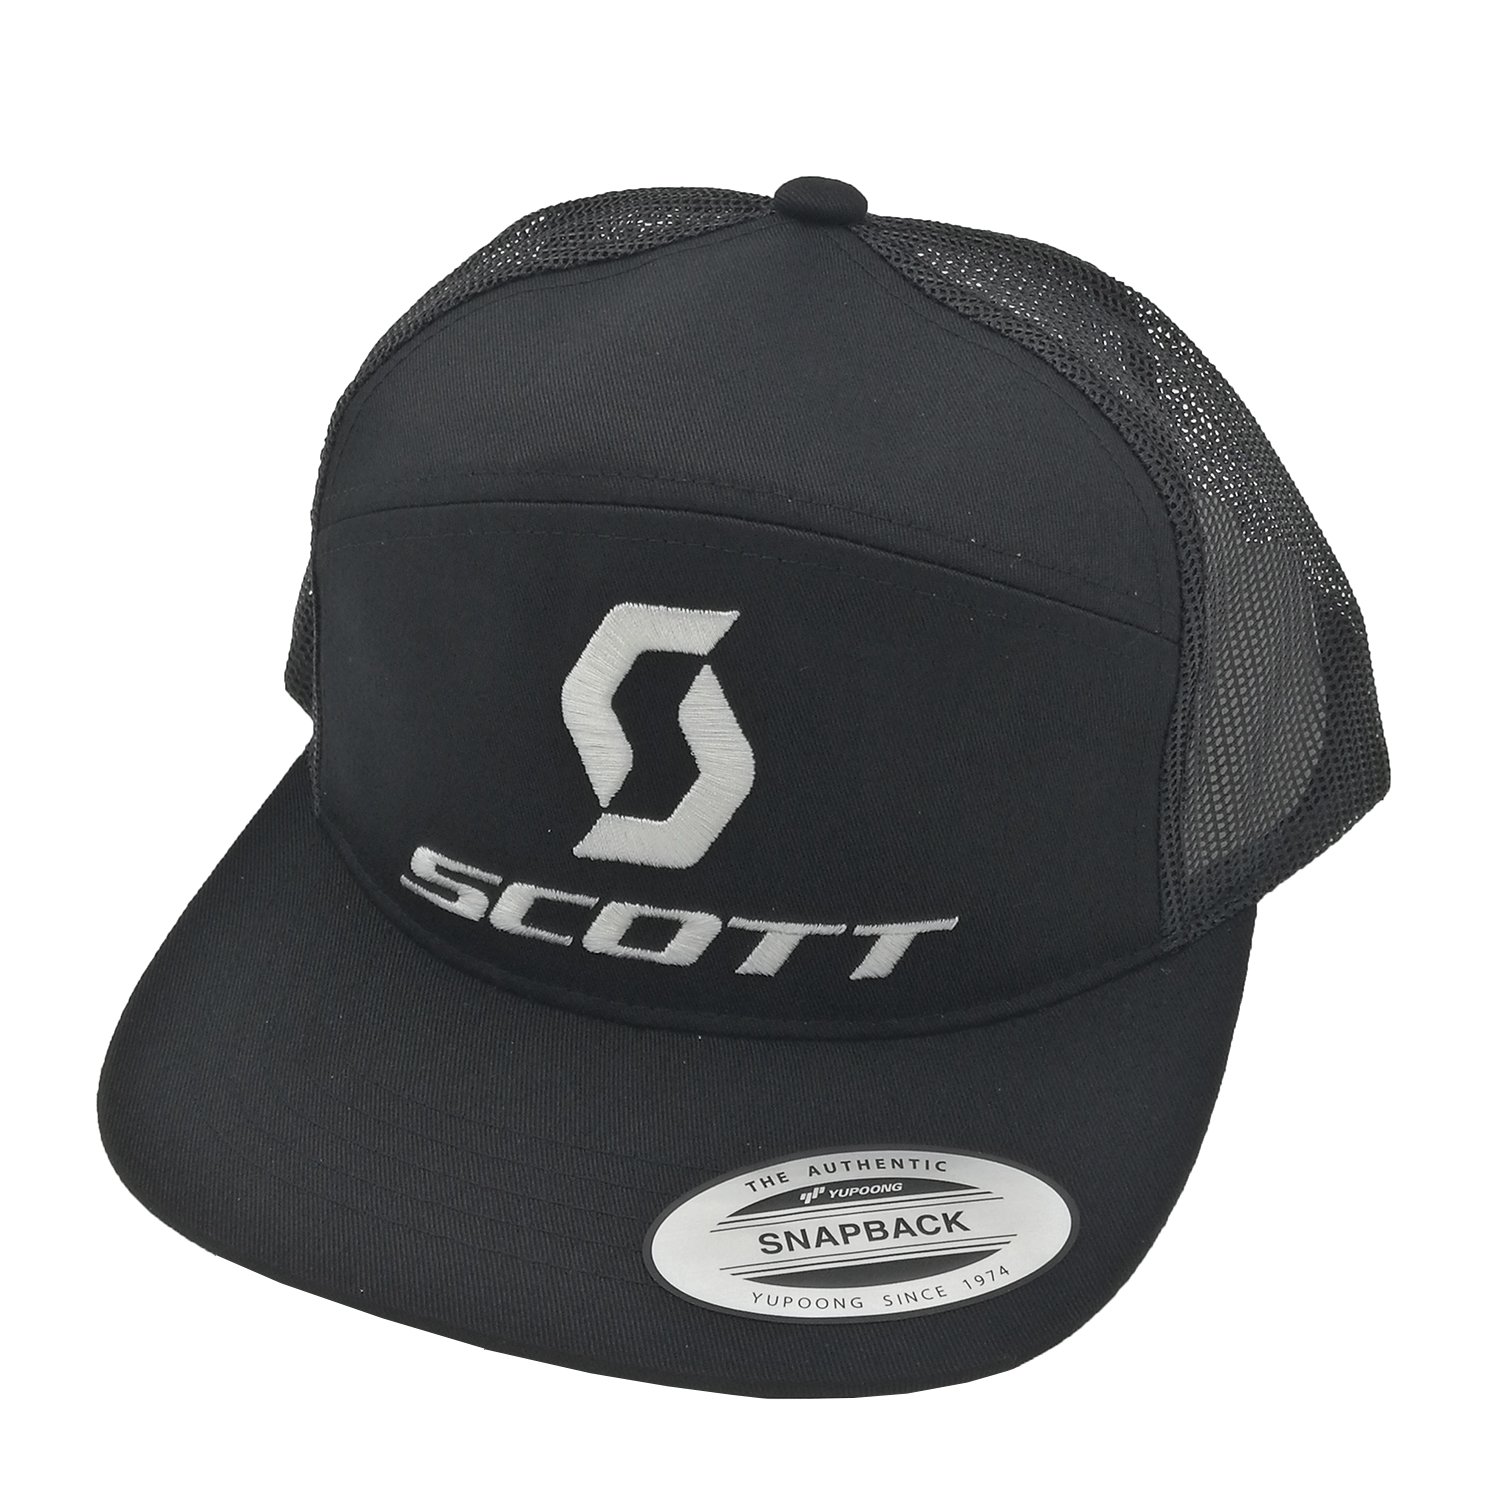 Snap back. Кепка Scott and Soda. Life Scott бейсболка. Велосипедная кепка спортсмены. Кепка Scott Motorsports.